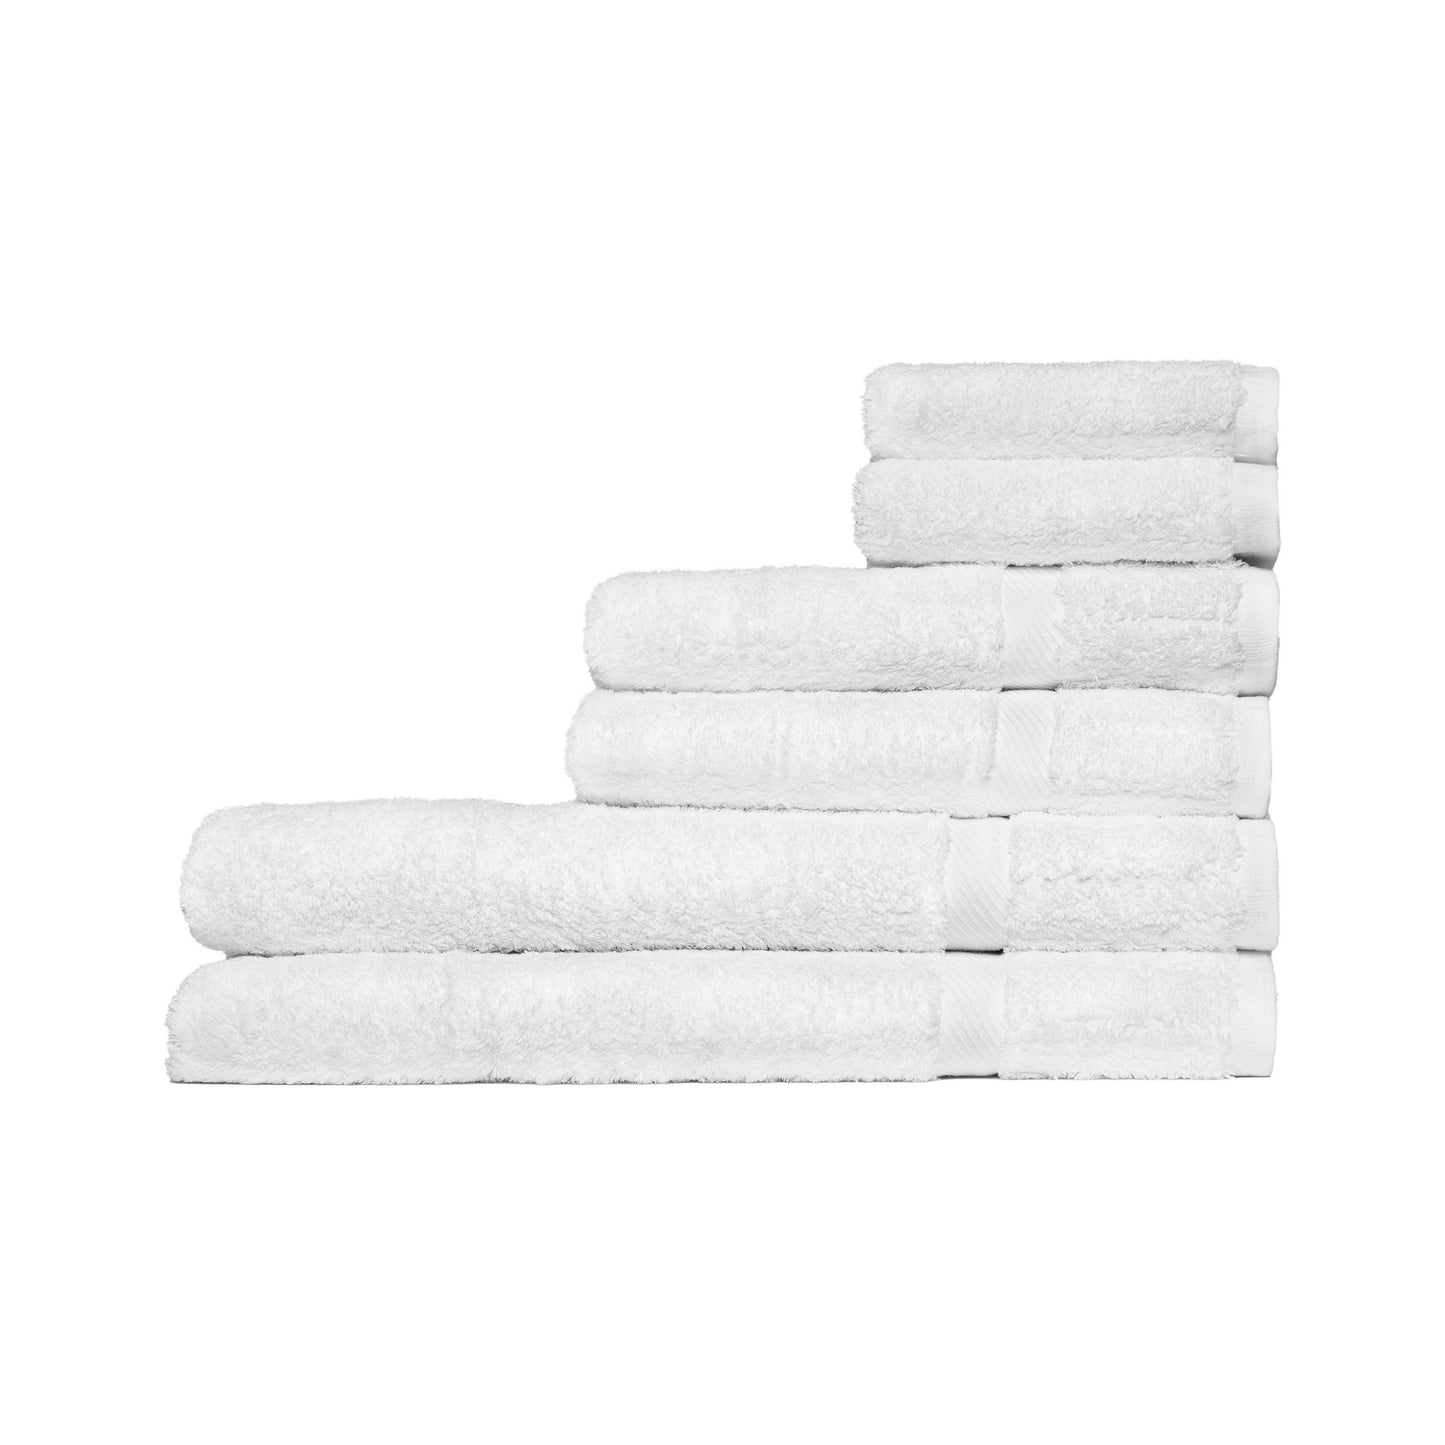 Cotton Bath Towels Absorbent Soft Spa Hand Towels Washcloths